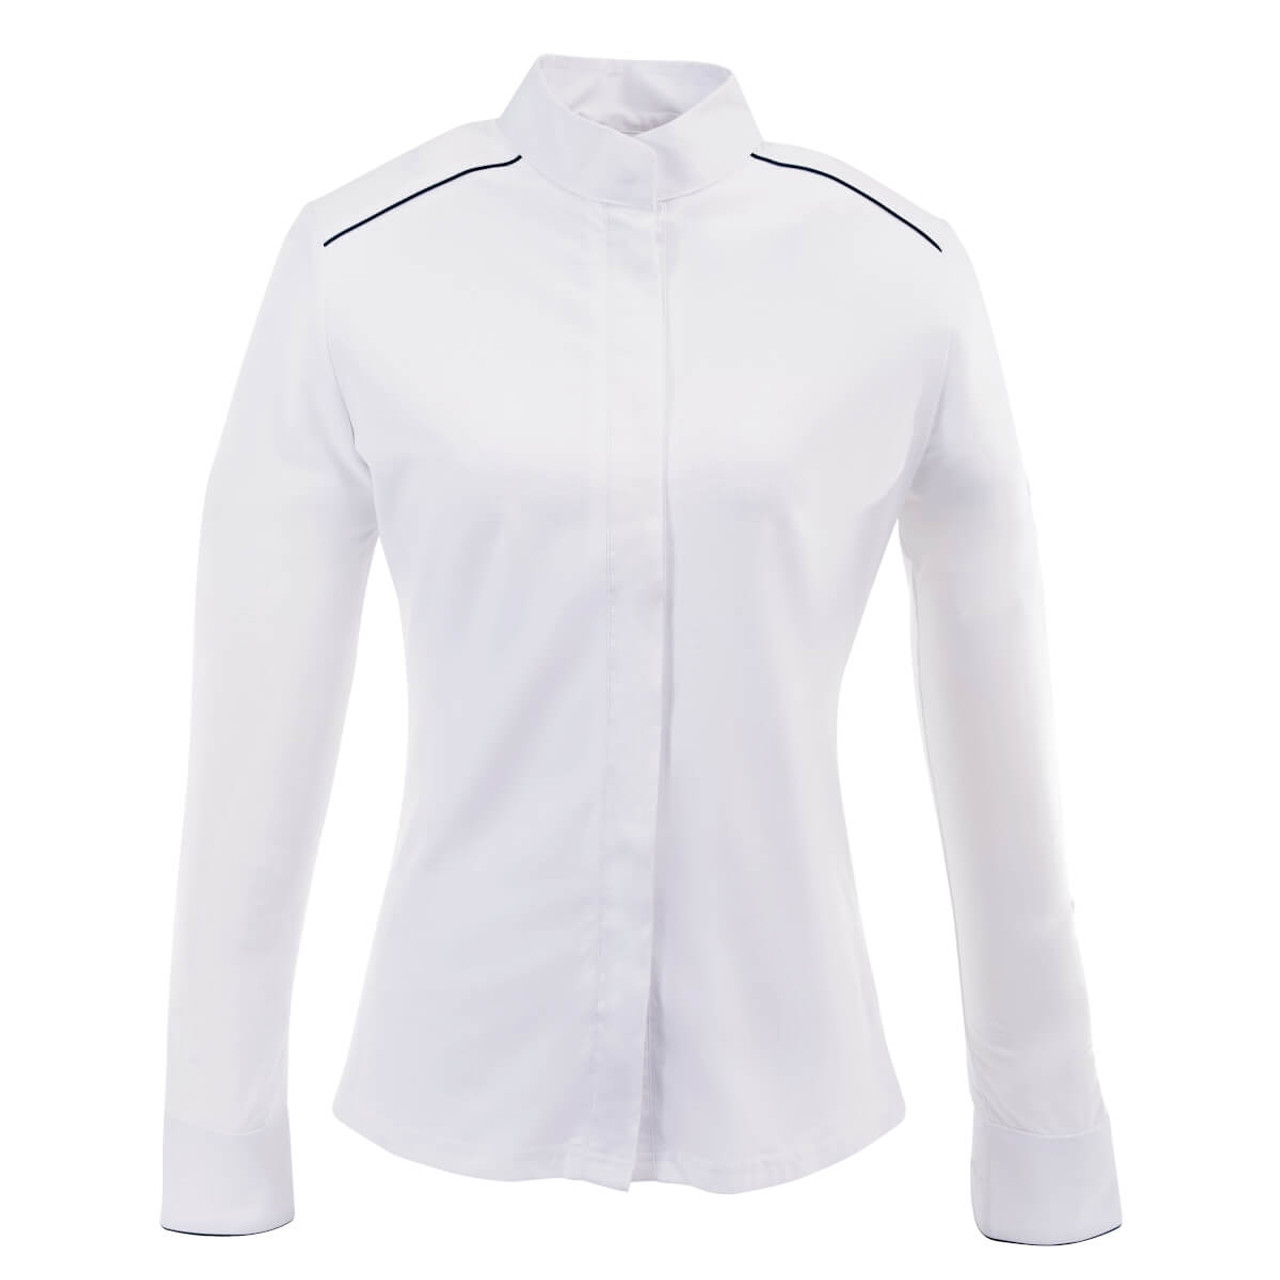 Ovation Ladies' Long Sleeve Performance Shirt - white w/navy